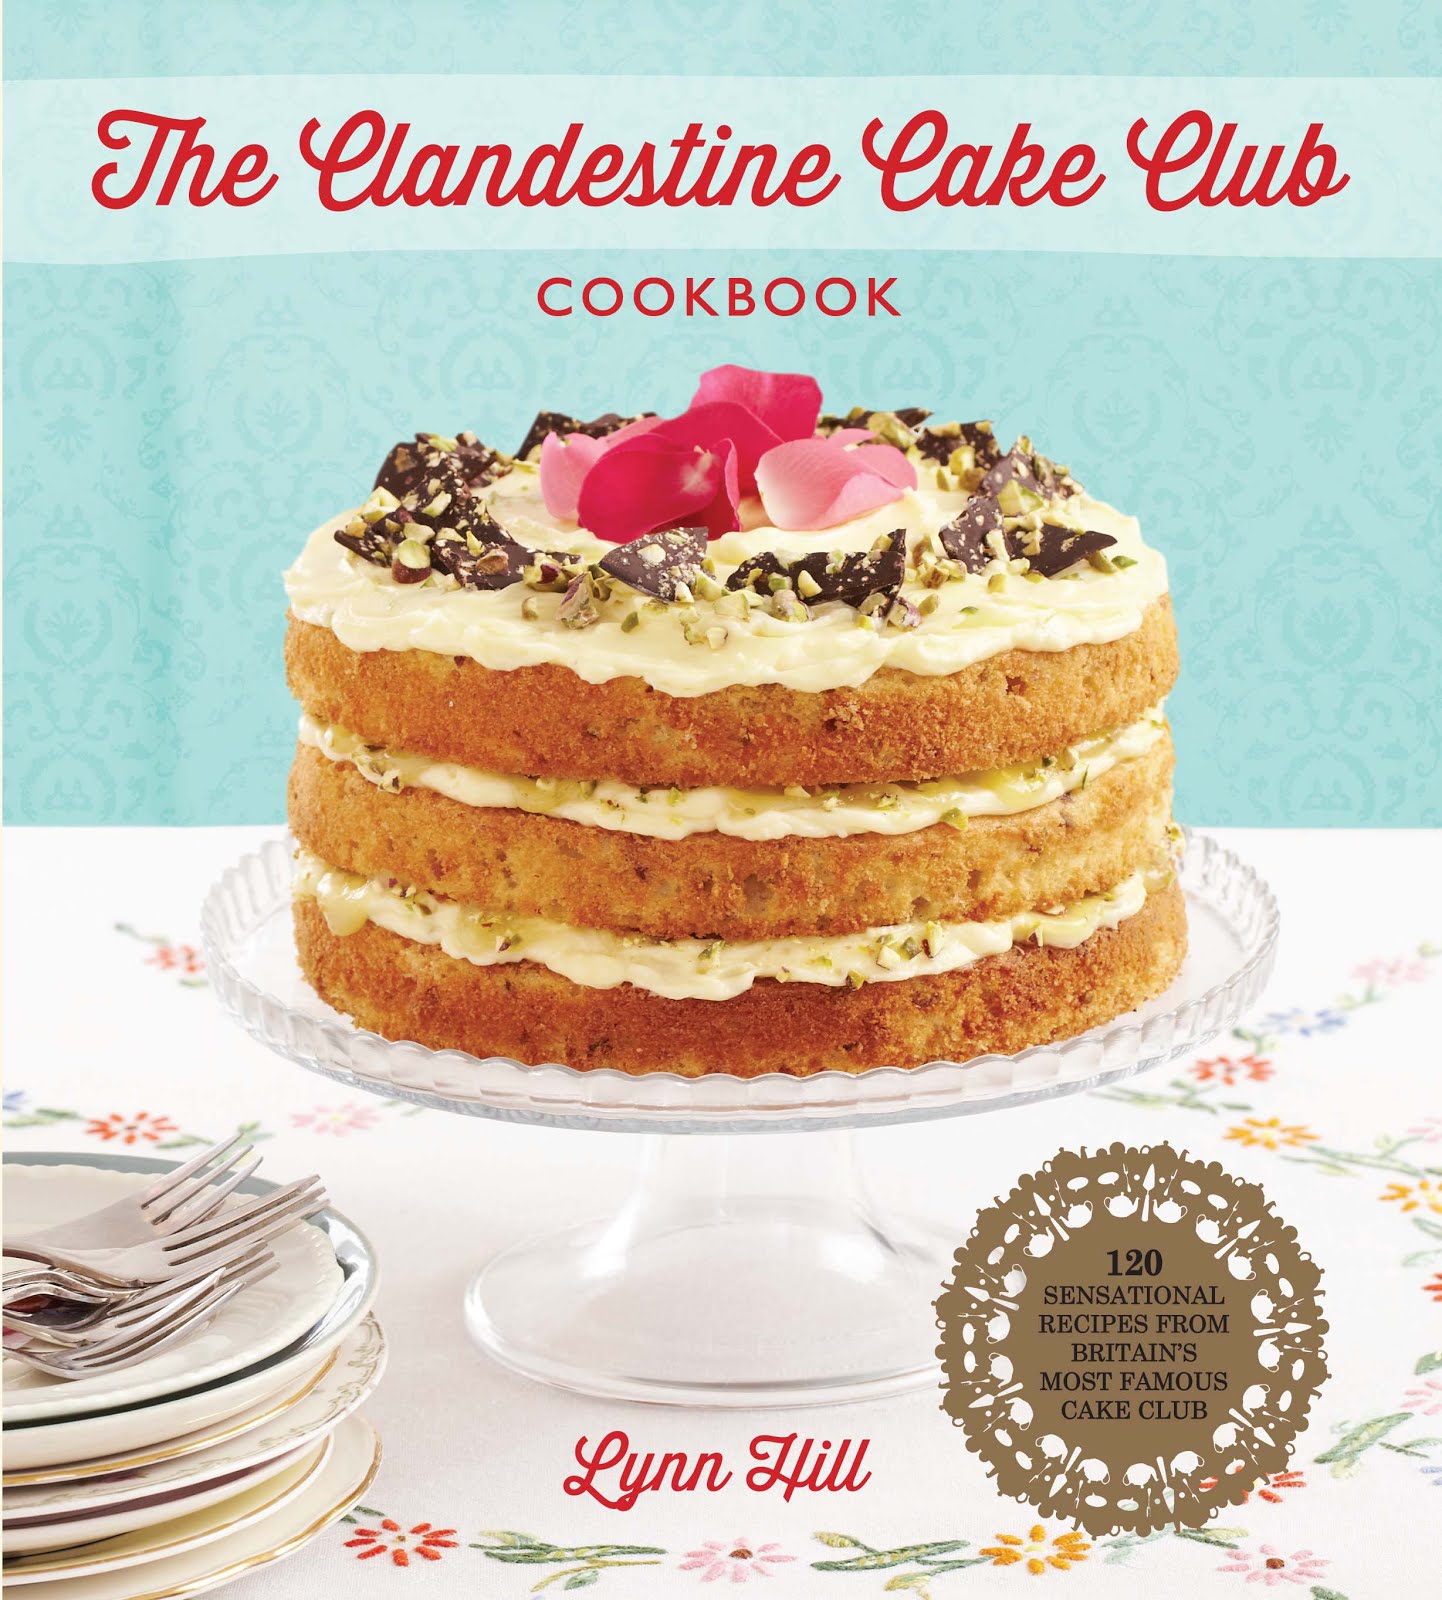 Clandestine Cake Club Cookbook